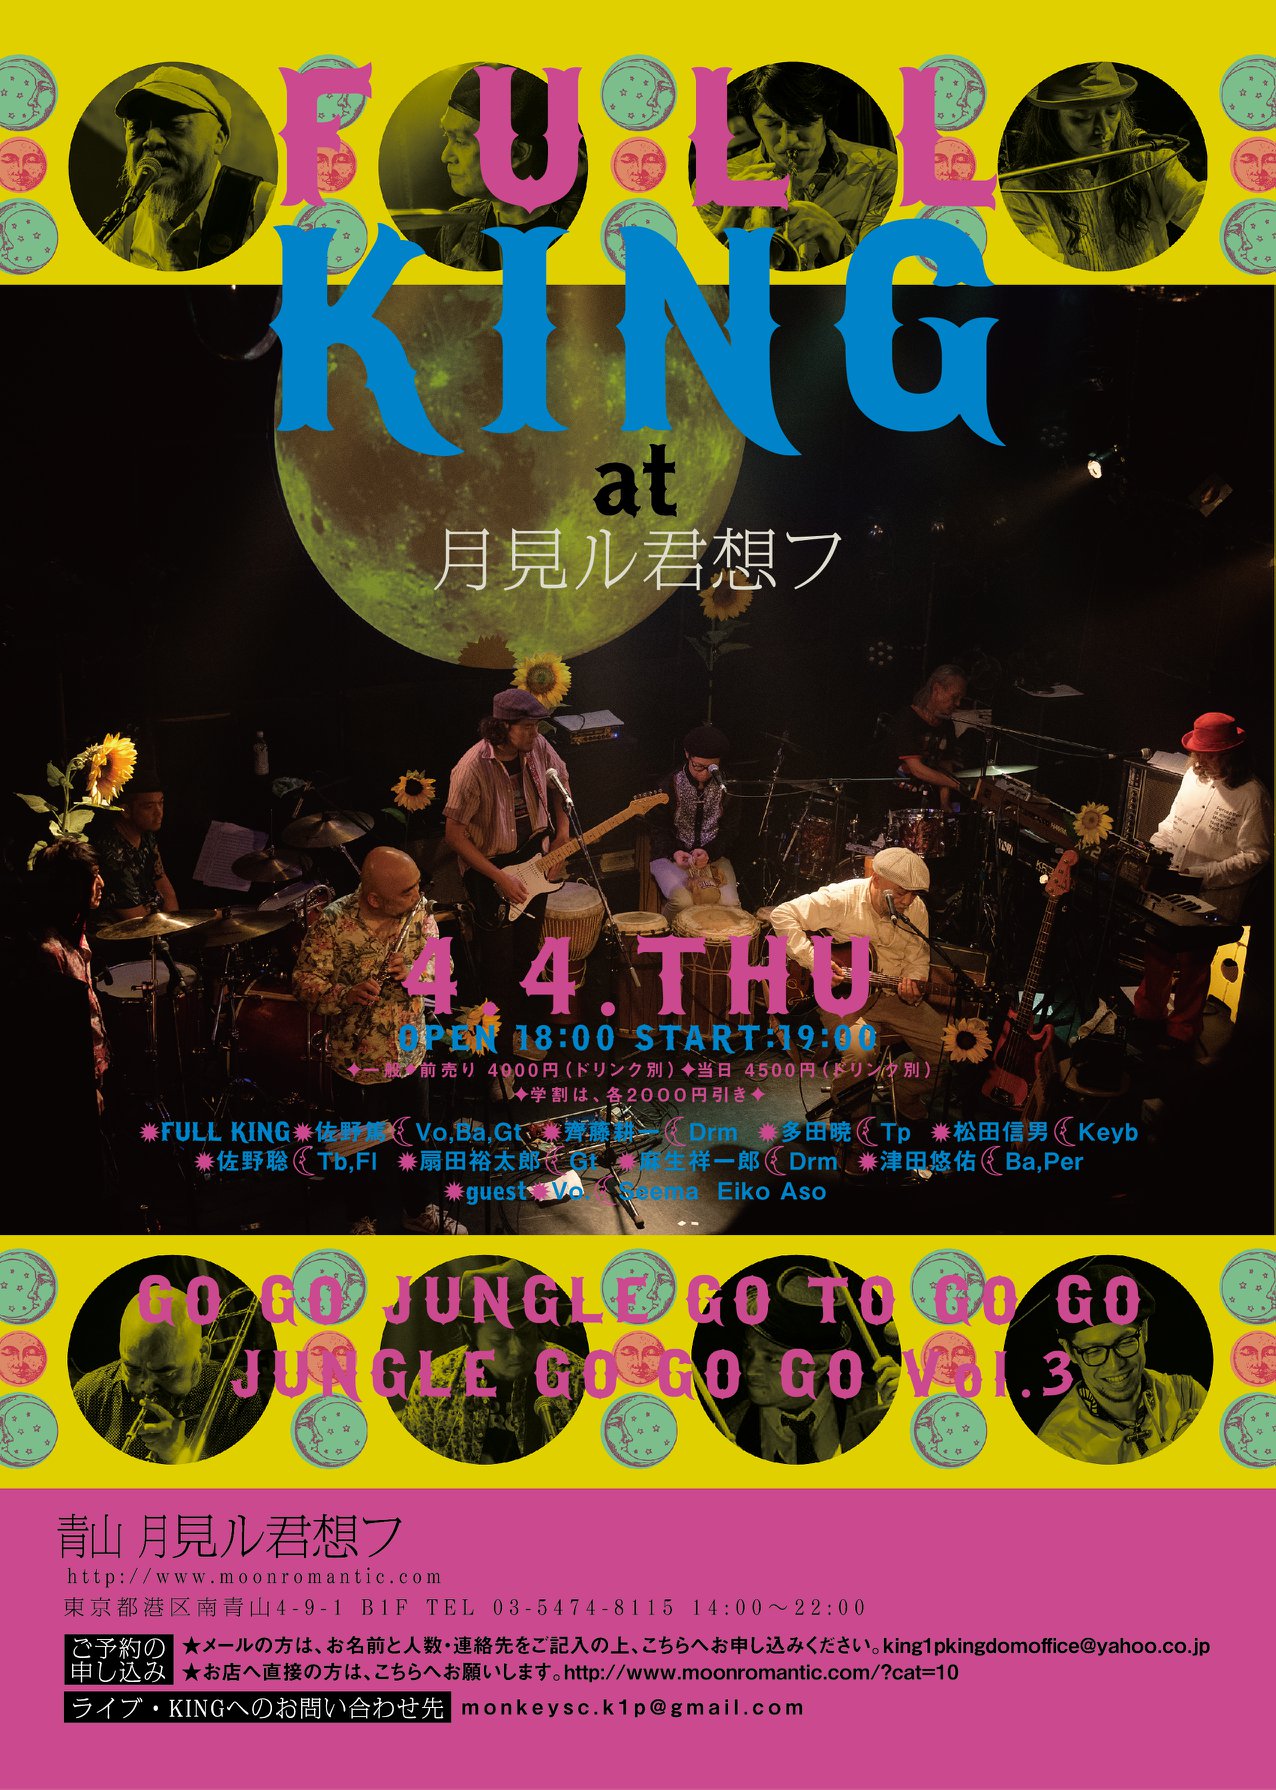 Full KING !! Live at 月見ル君想フ